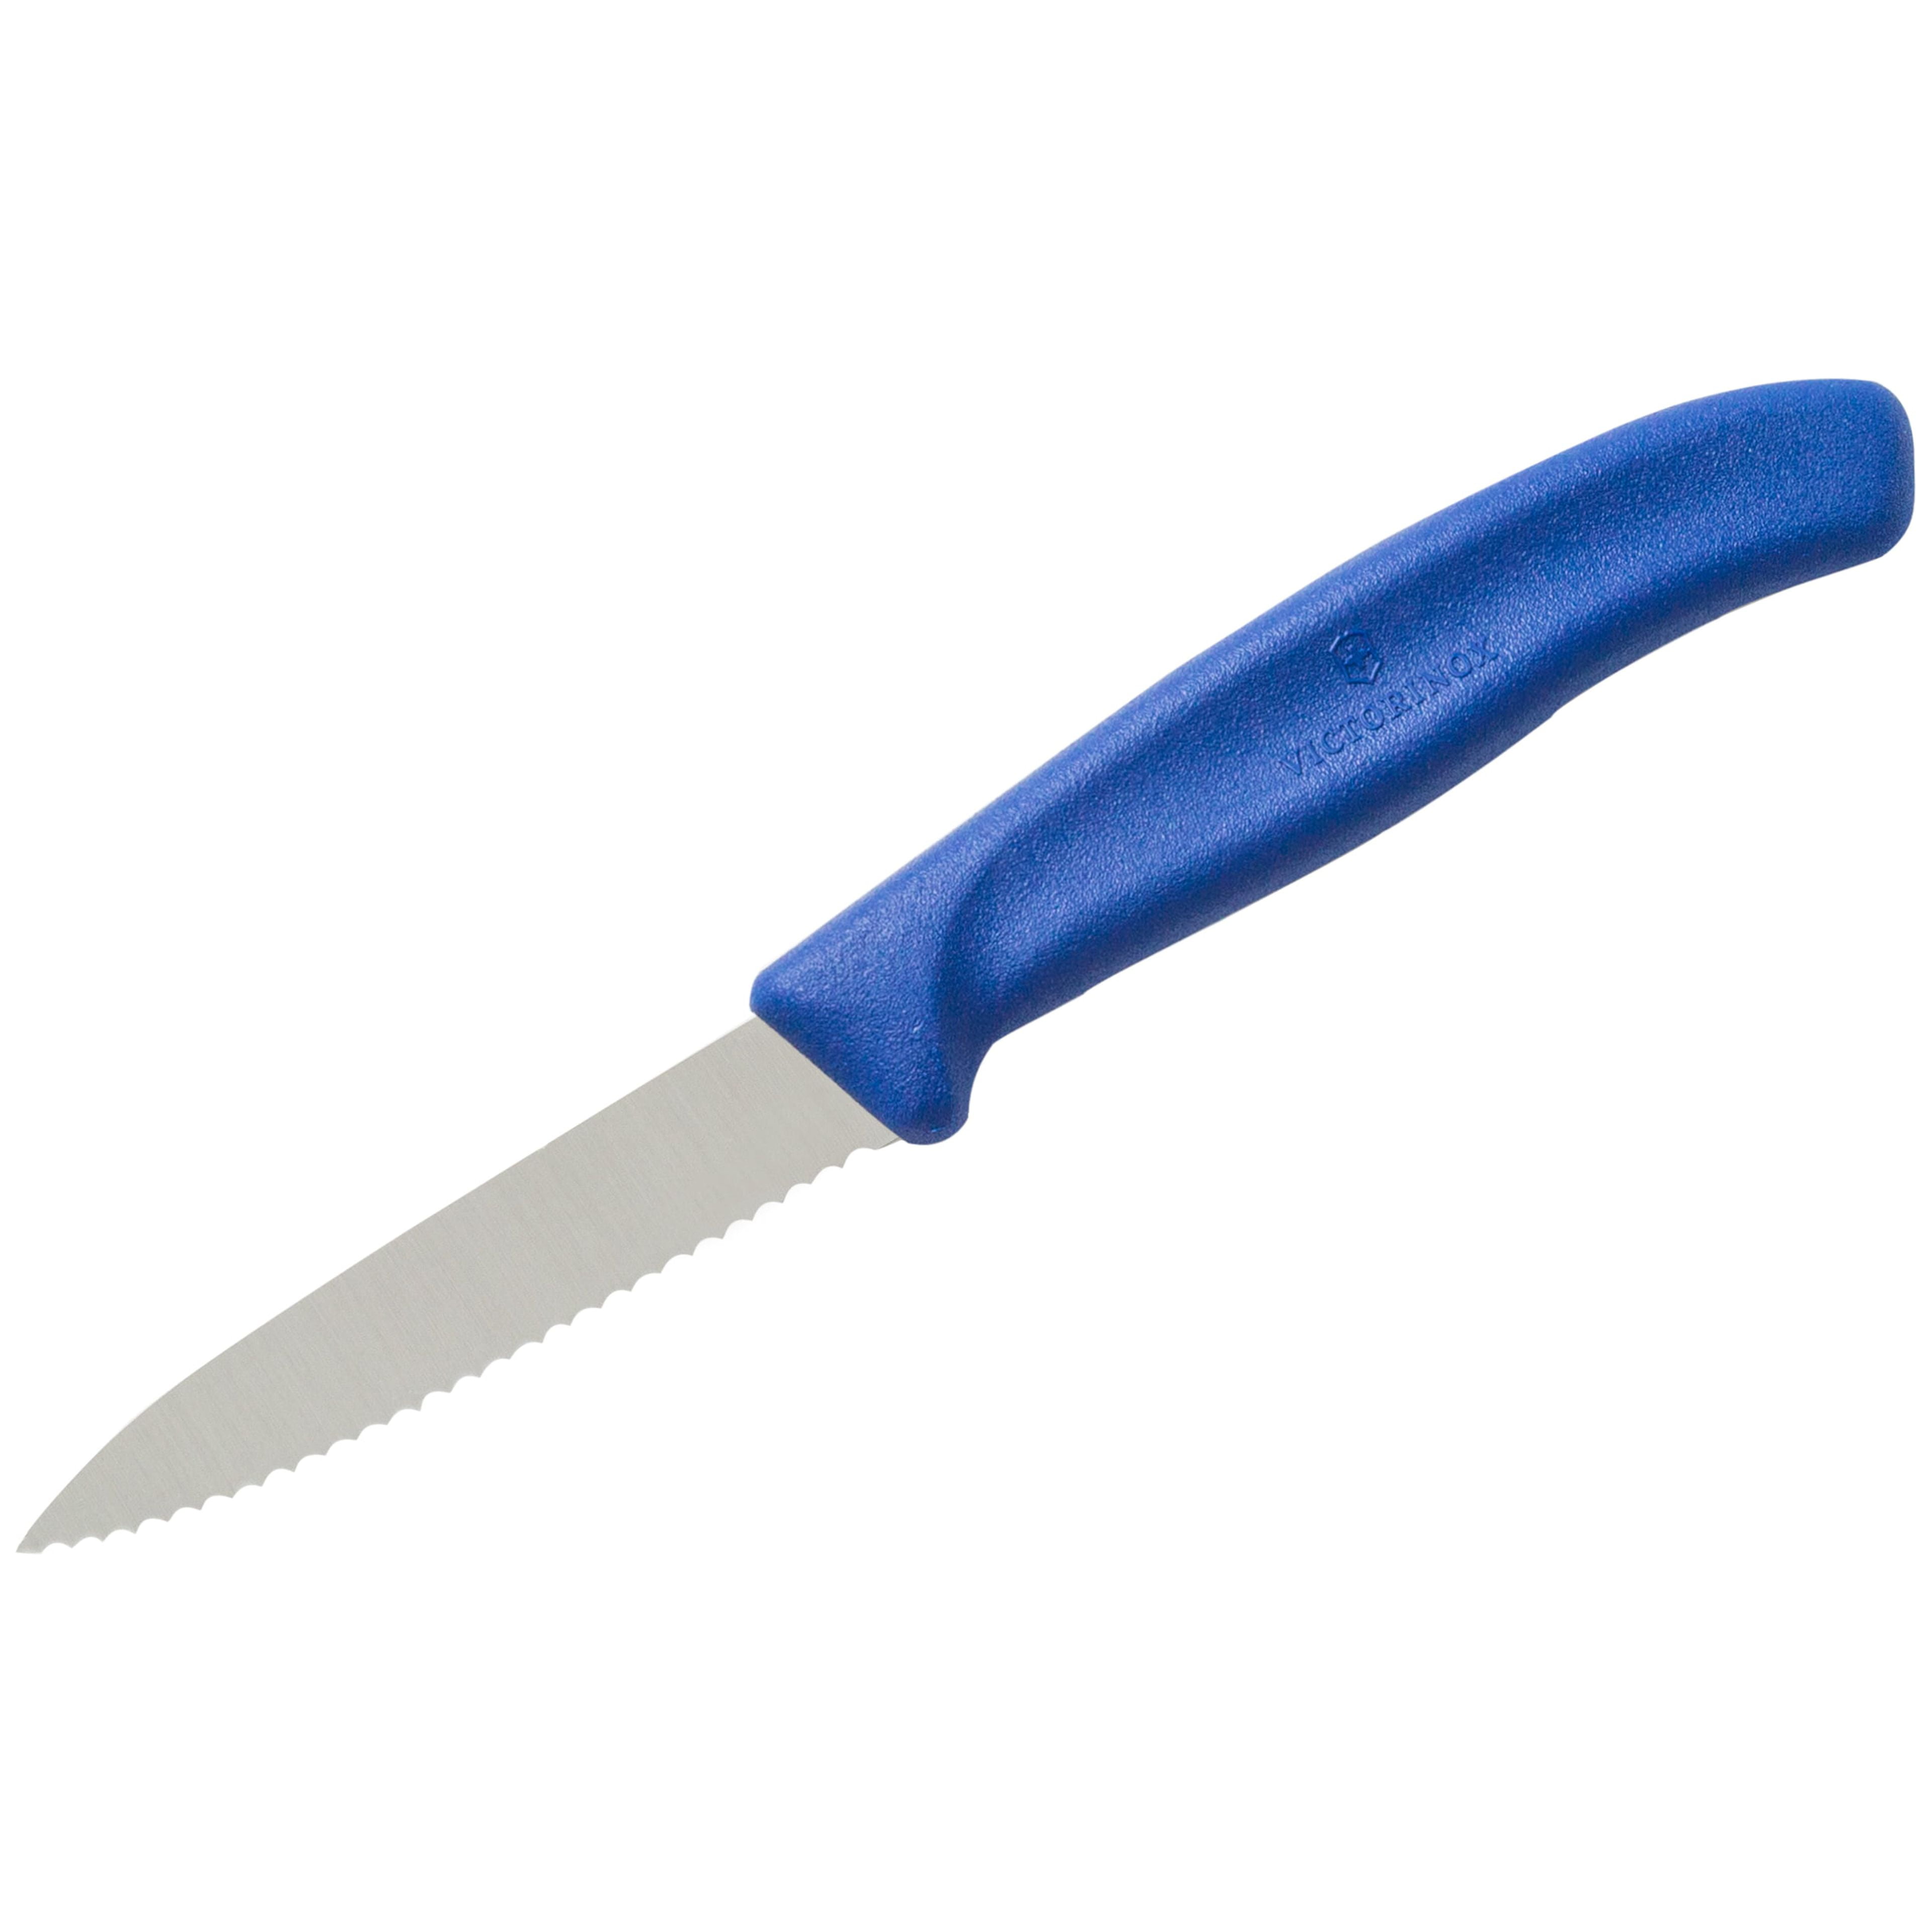 Victorinox 3.25 Paring Knife w/ Small Black Handle